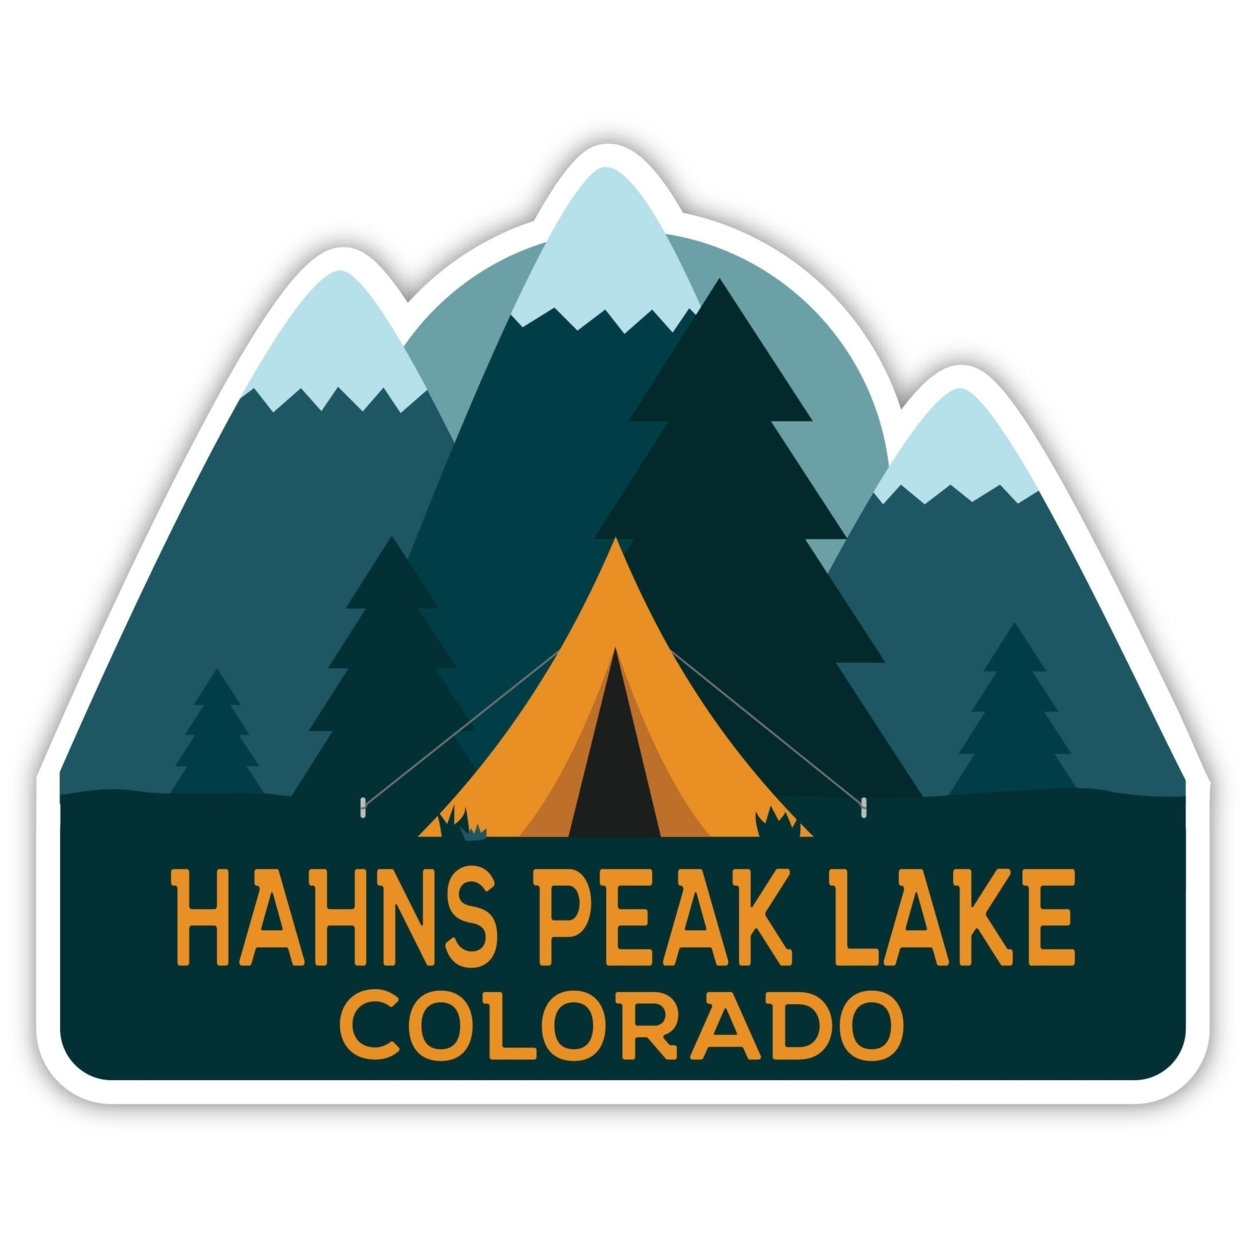 Hahns Peak Lake Colorado Souvenir Decorative Stickers (Choose Theme And Size) - Single Unit, 4-Inch, Tent